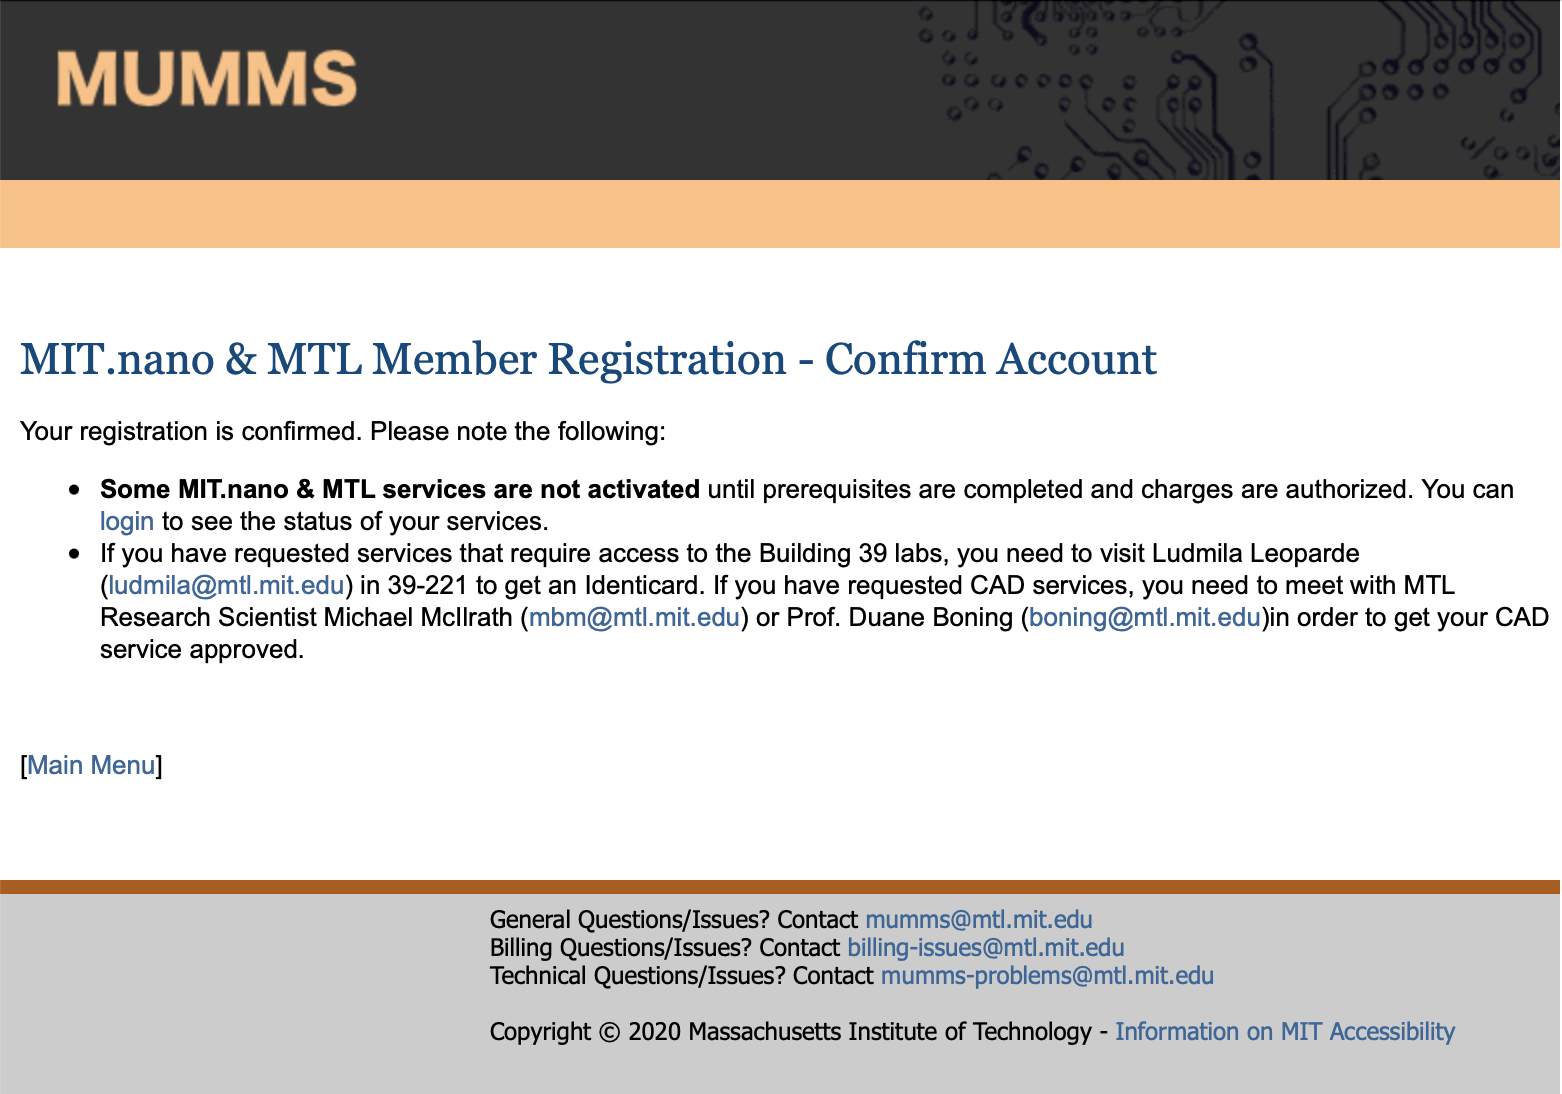 MUMMS registration created